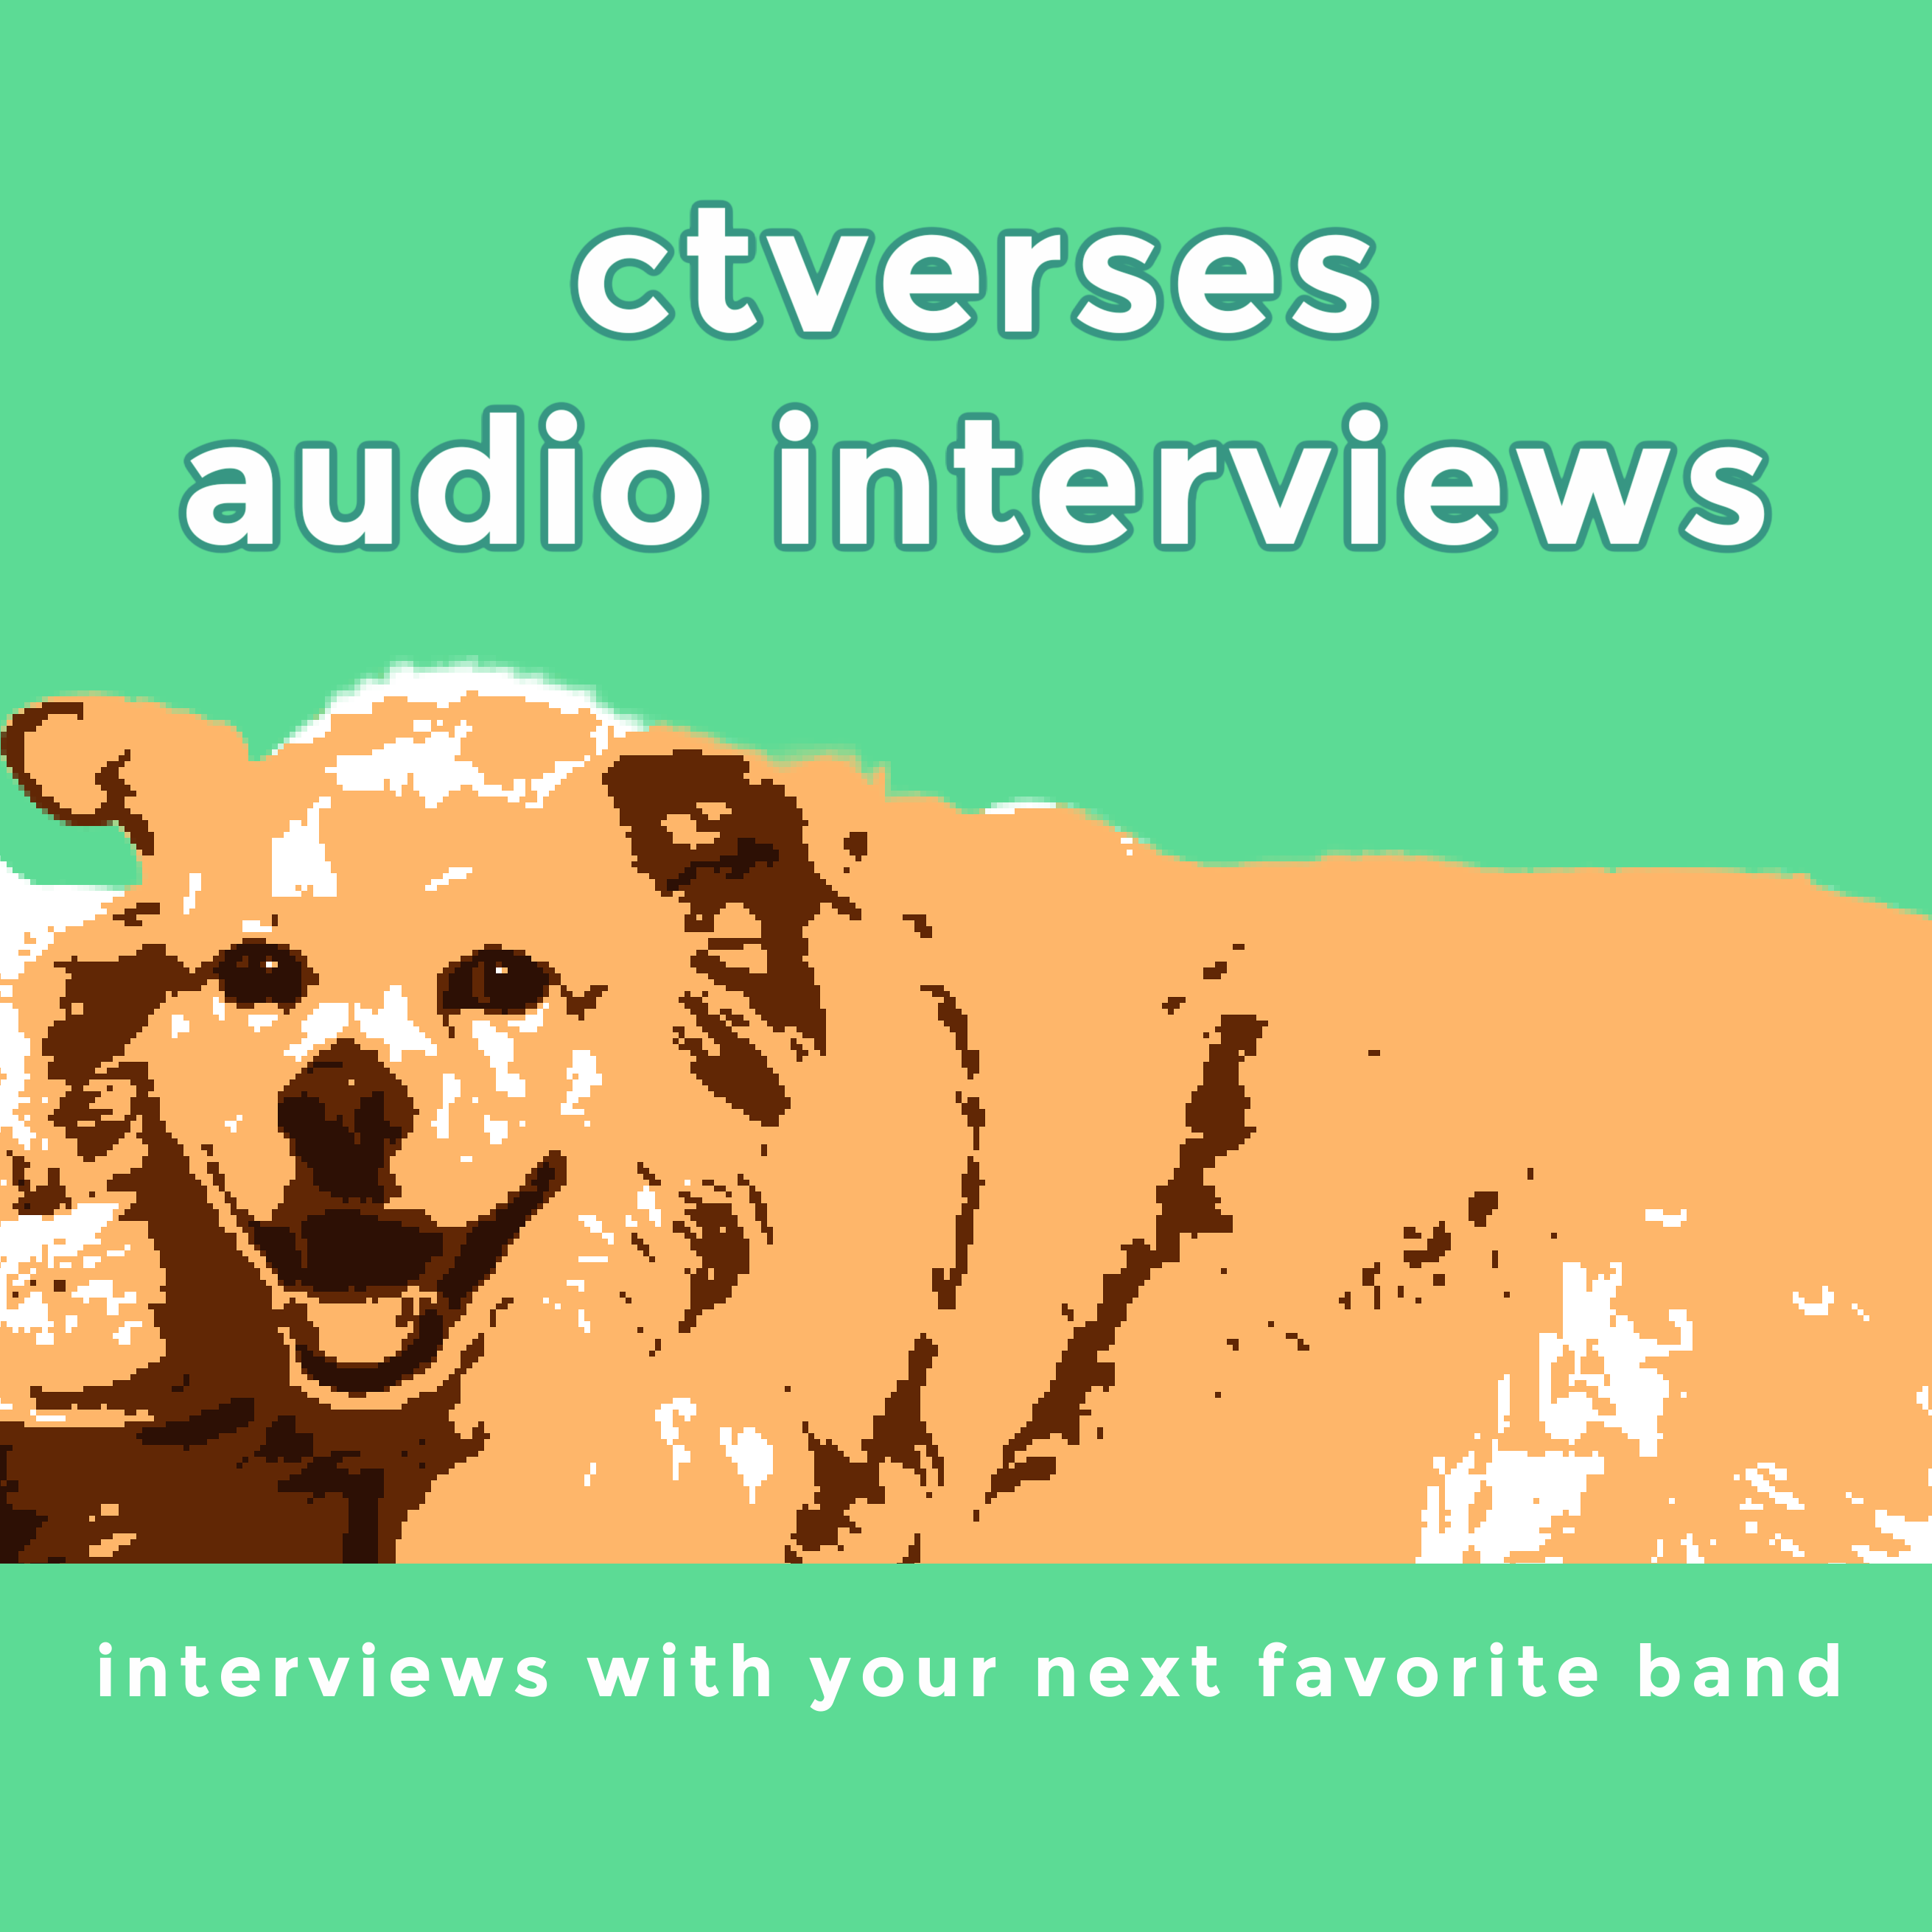 ctverses audio interviews